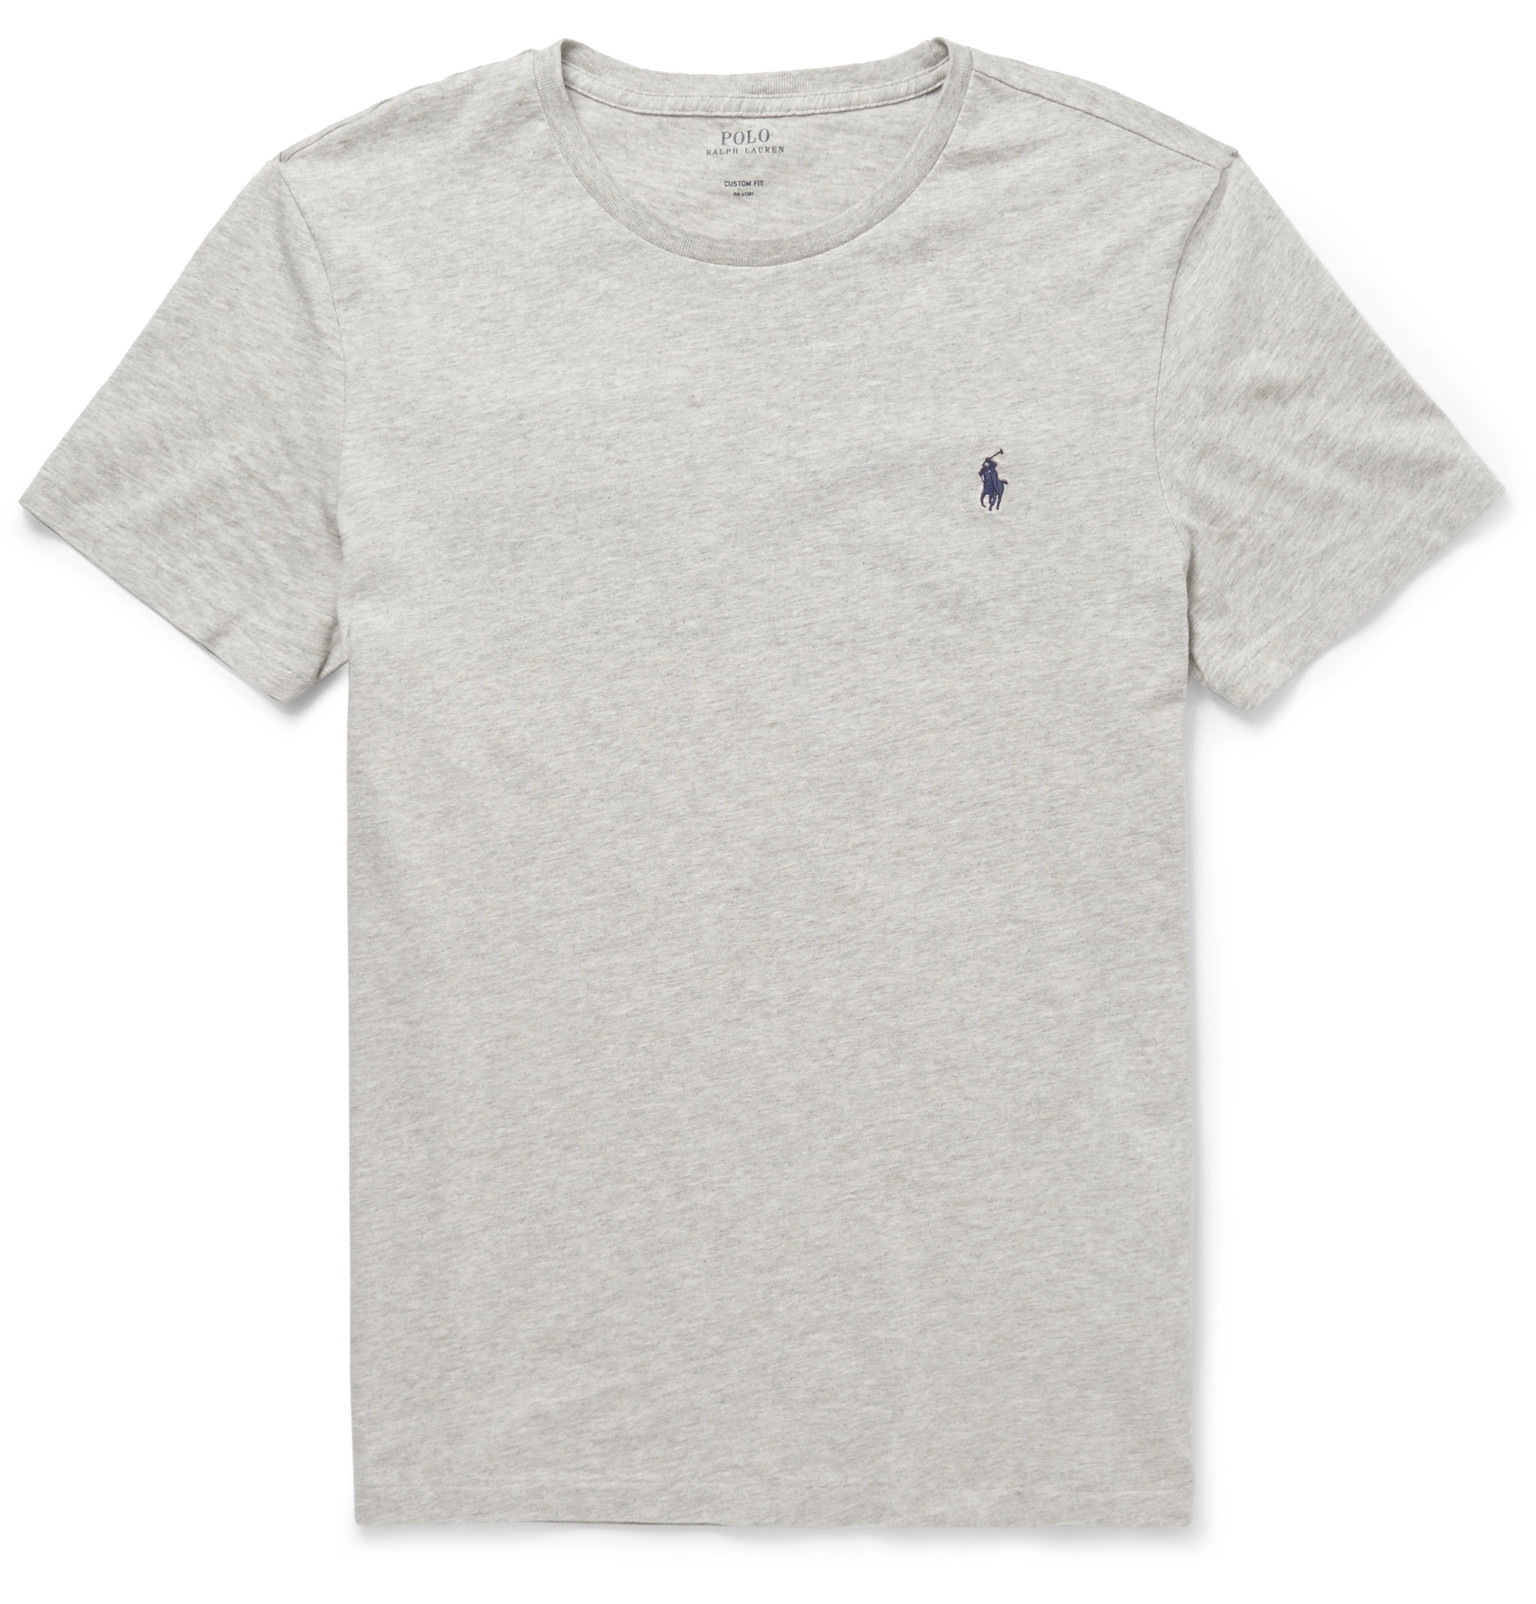 Polo Ralph Lauren - Slim-Fit Cotton-Jersey T-Shirt - Men - Gray | The ...